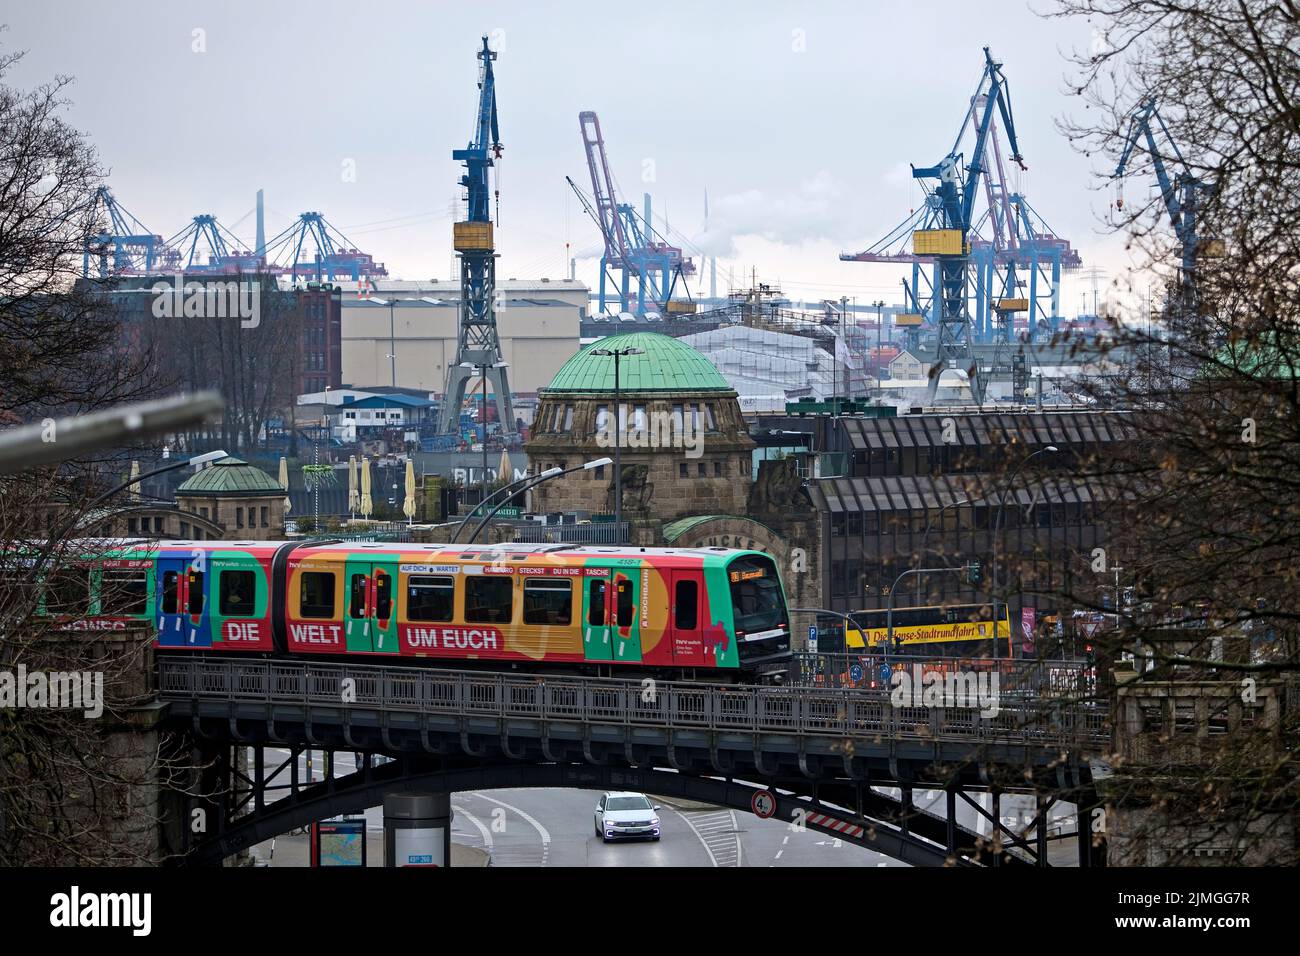 Elevated railway, Landungsbruecke 4 and cranes at the harbour, St. Pauli, Hamburg, Germany, Europe Stock Photo